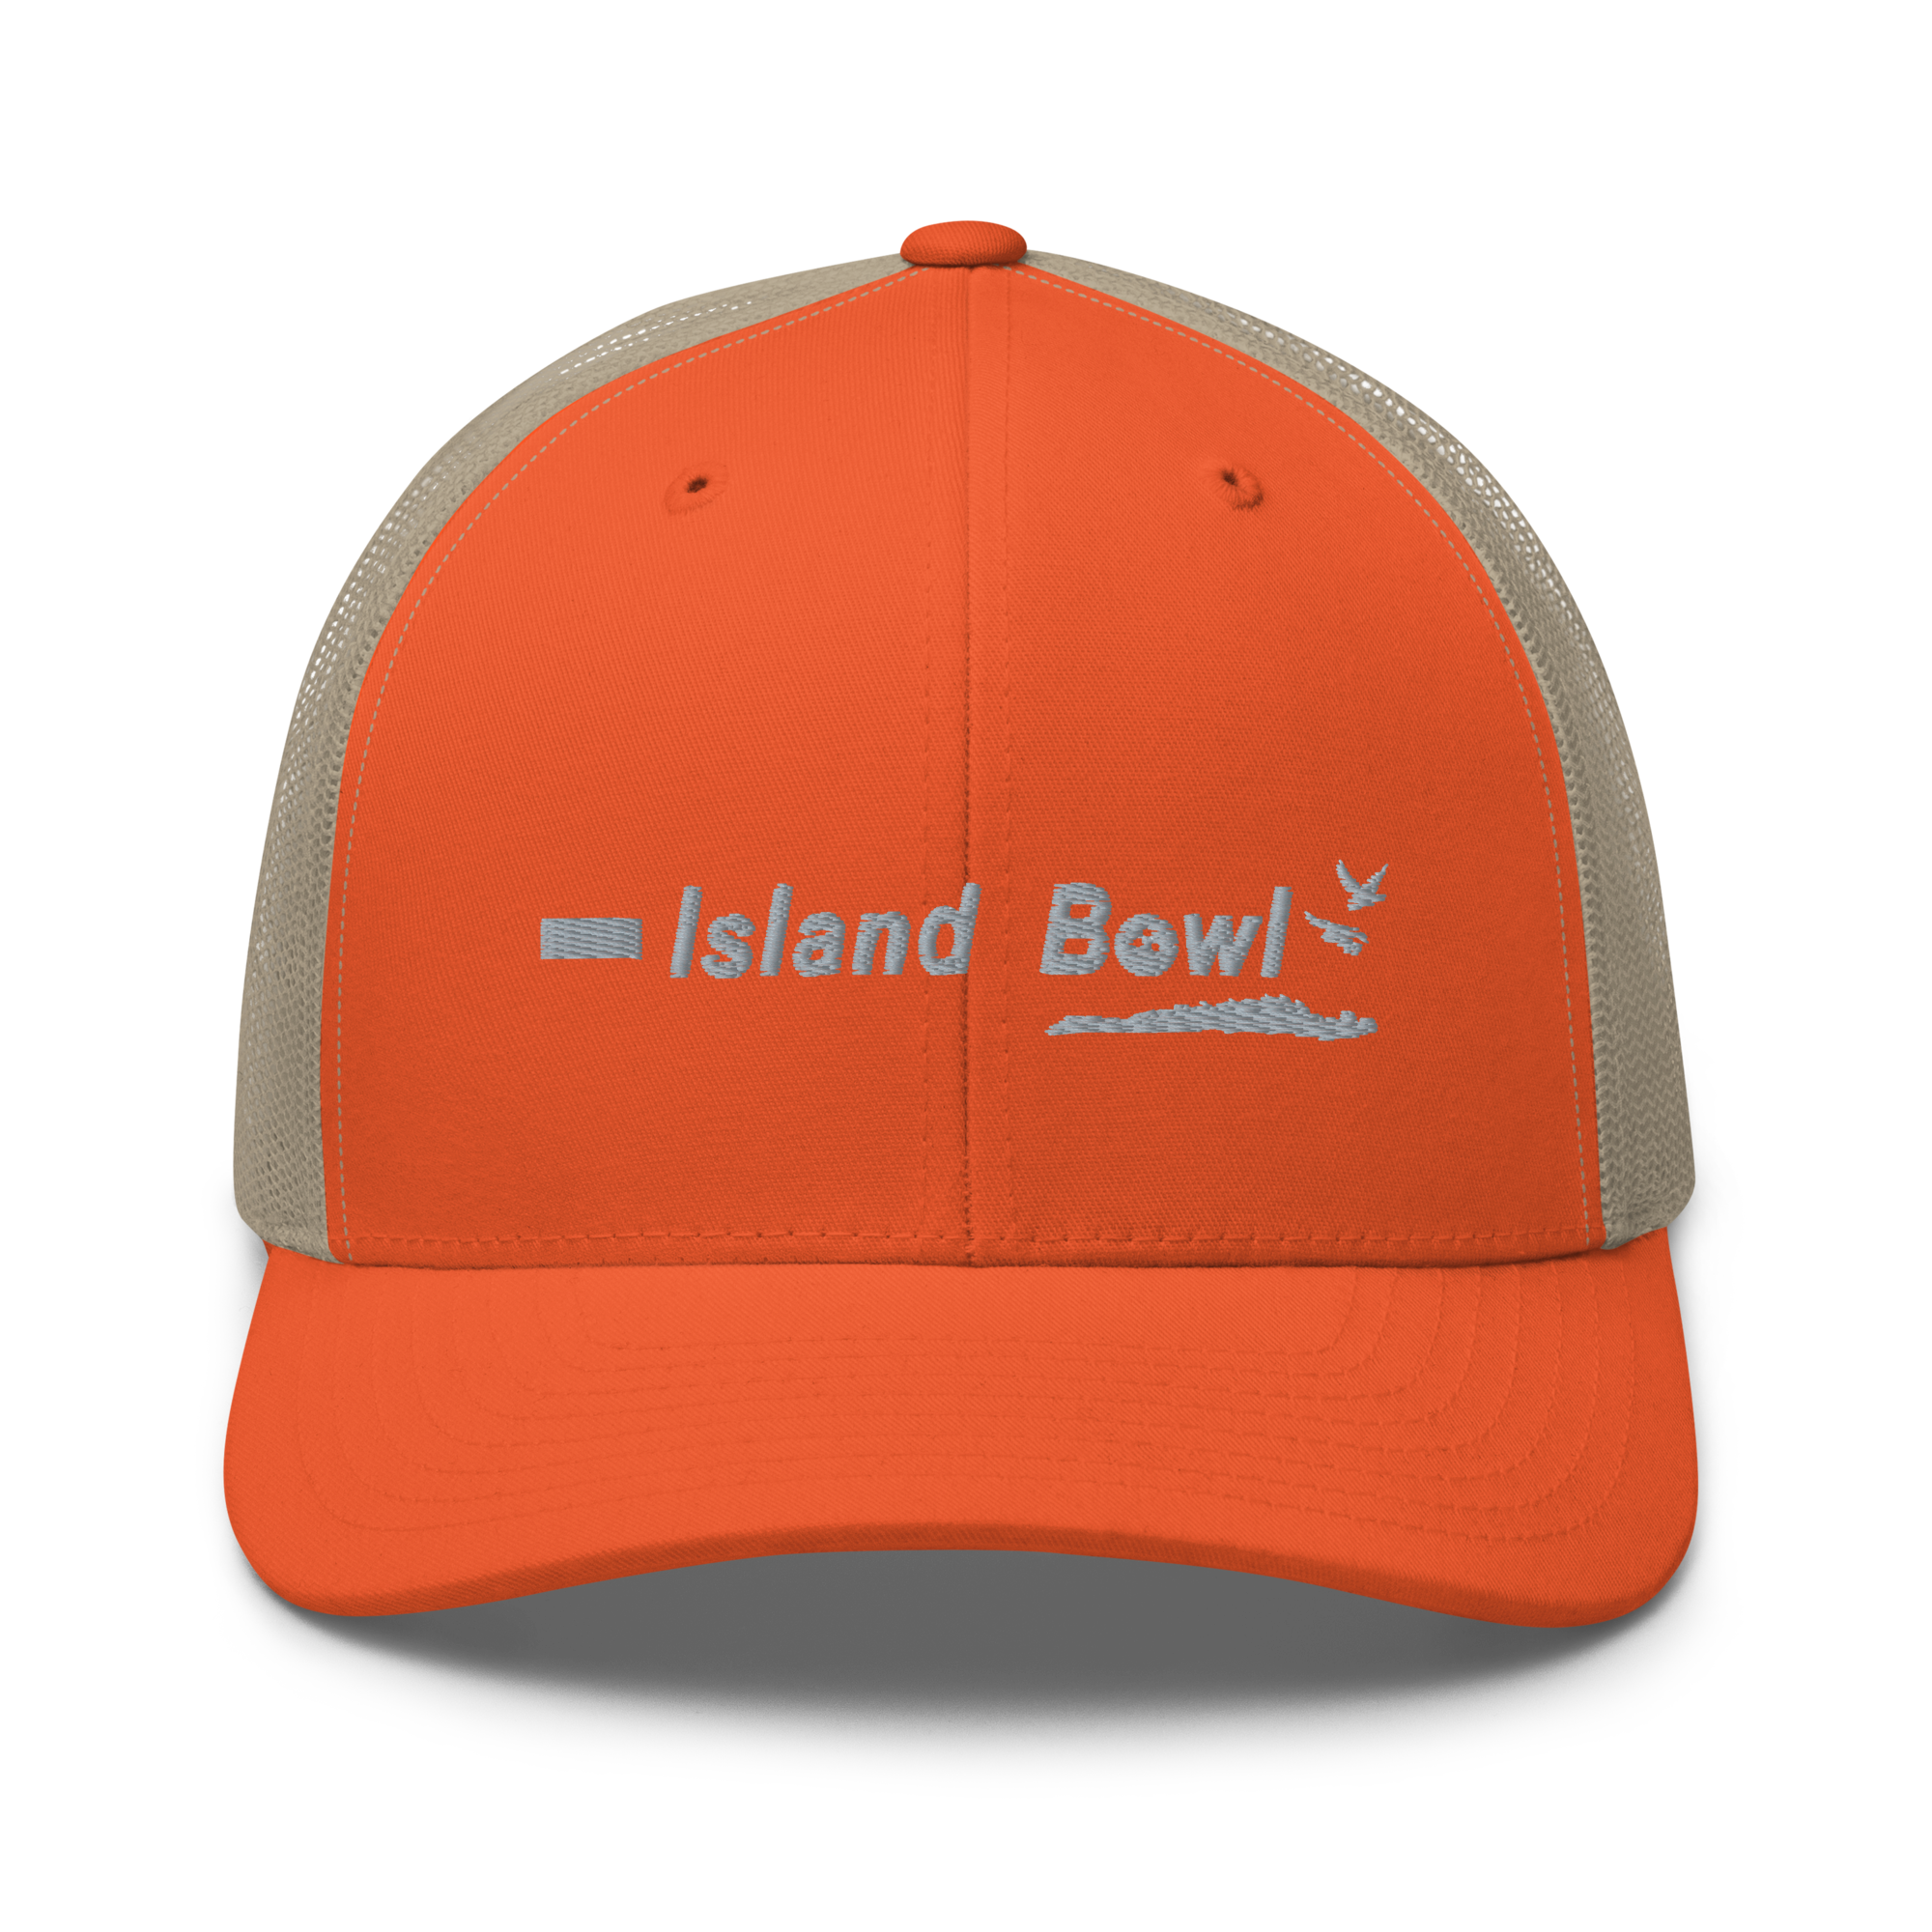 Island Bowl - Trucker Cap